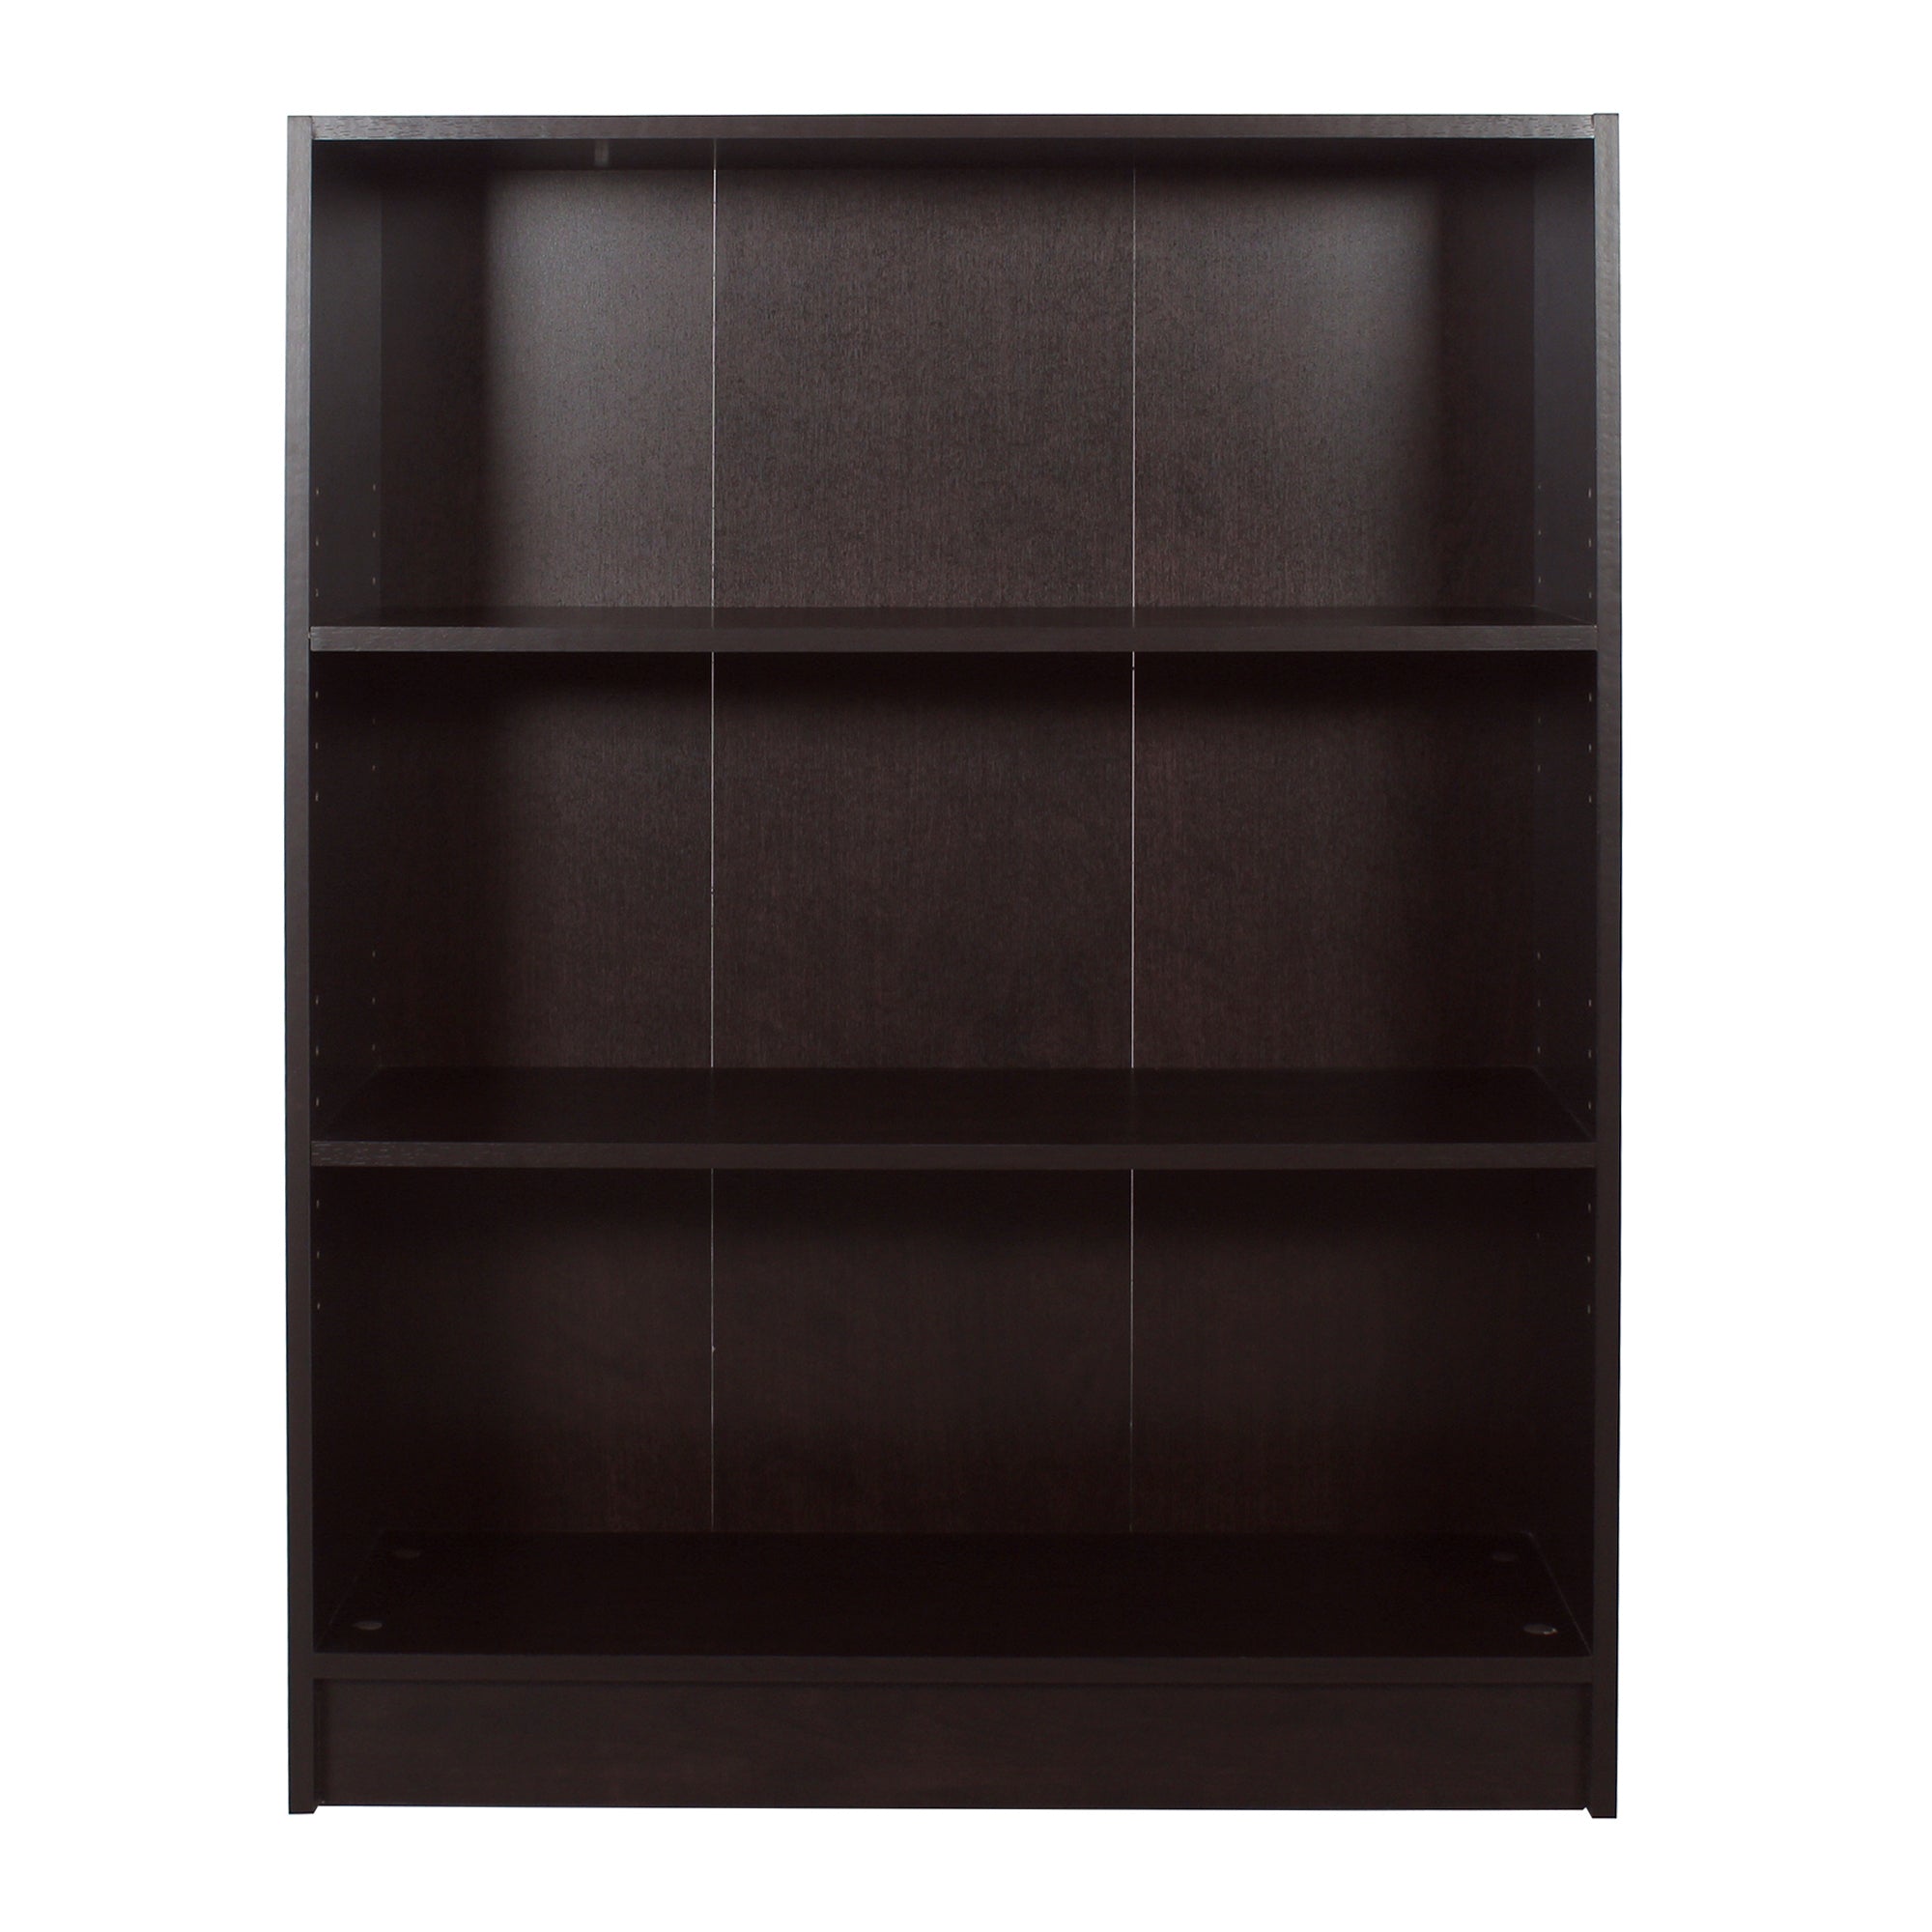 Lazywud Book Shelf For Living Room (Dark Wenge)